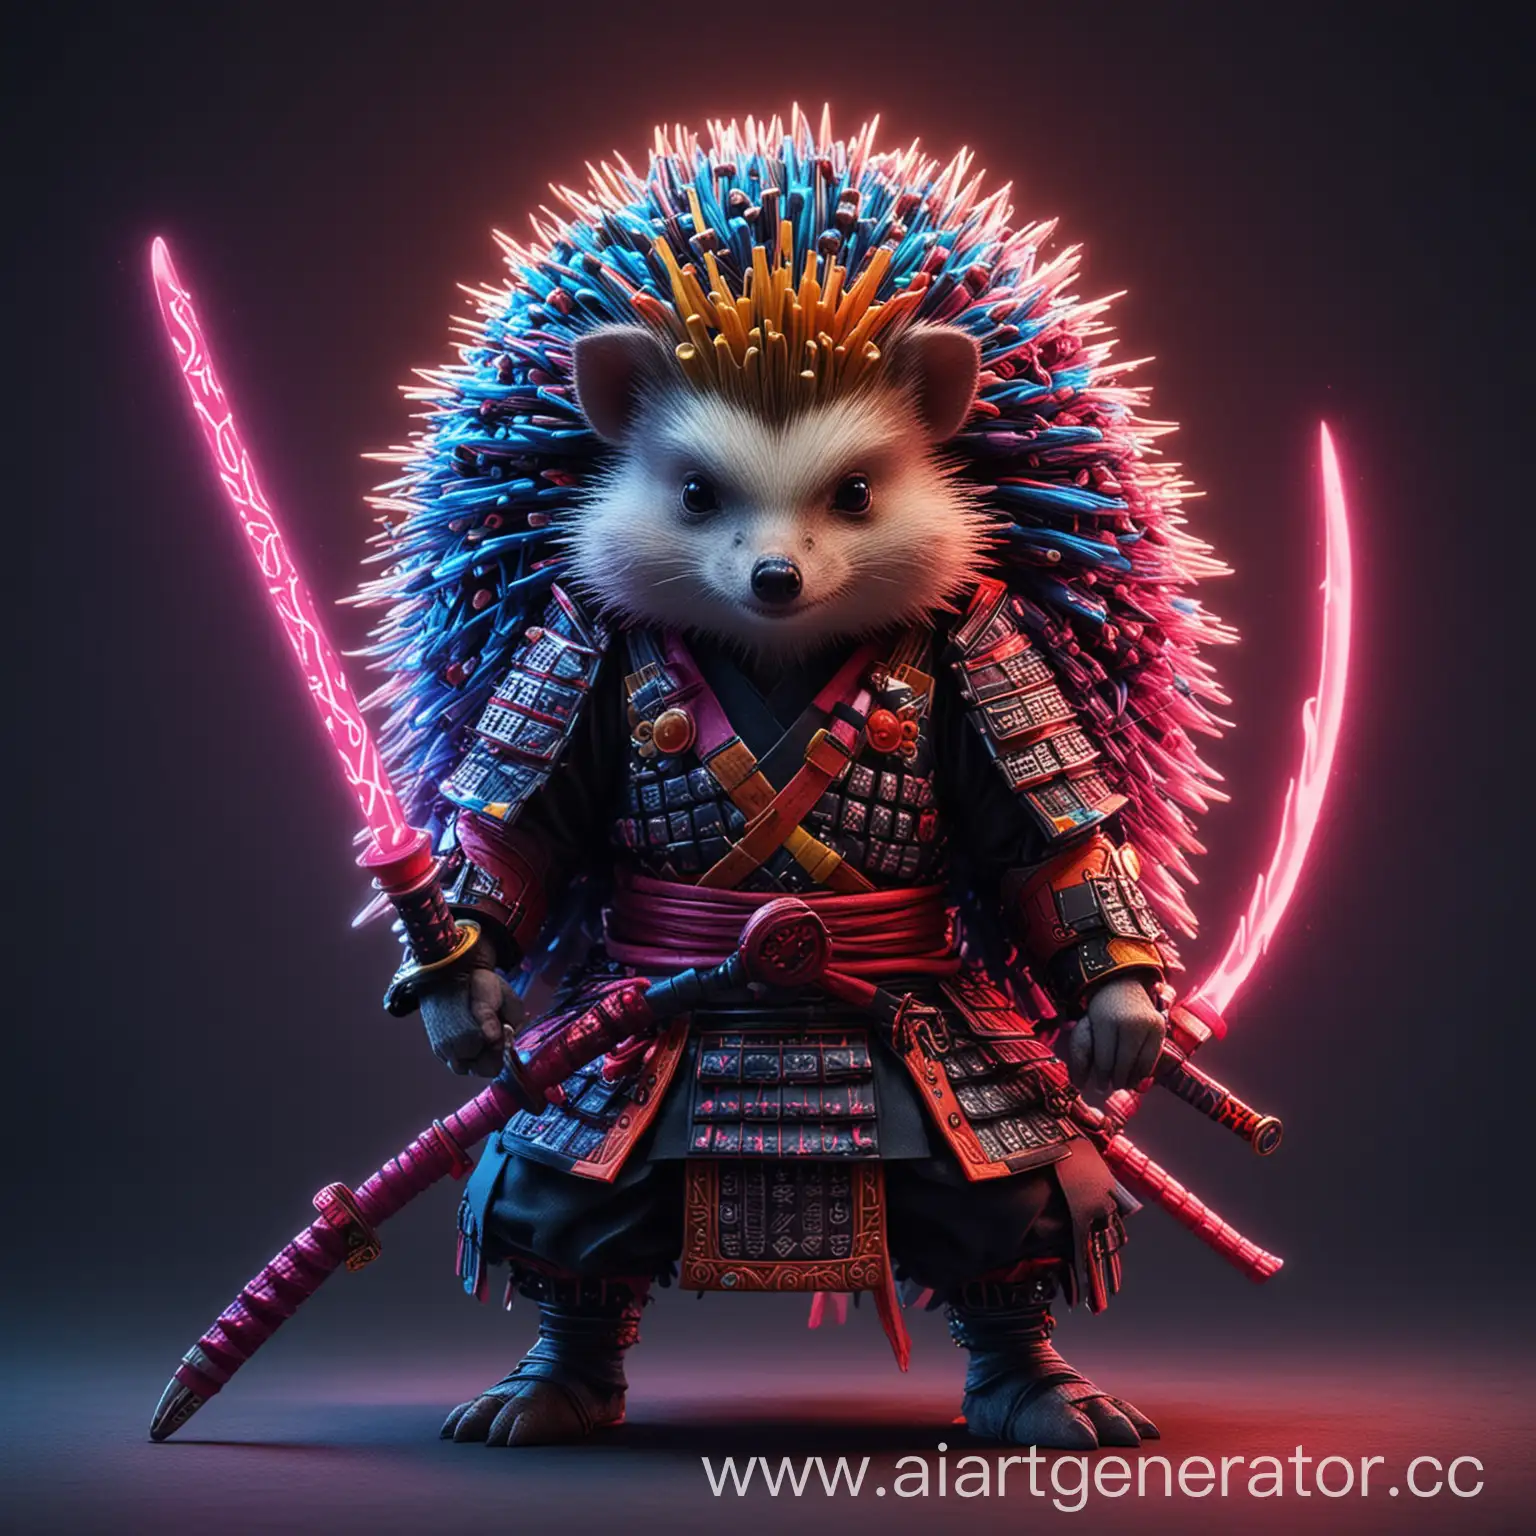 Neon-Hedgehog-Samurai-in-Cyberpunk-Cityscape